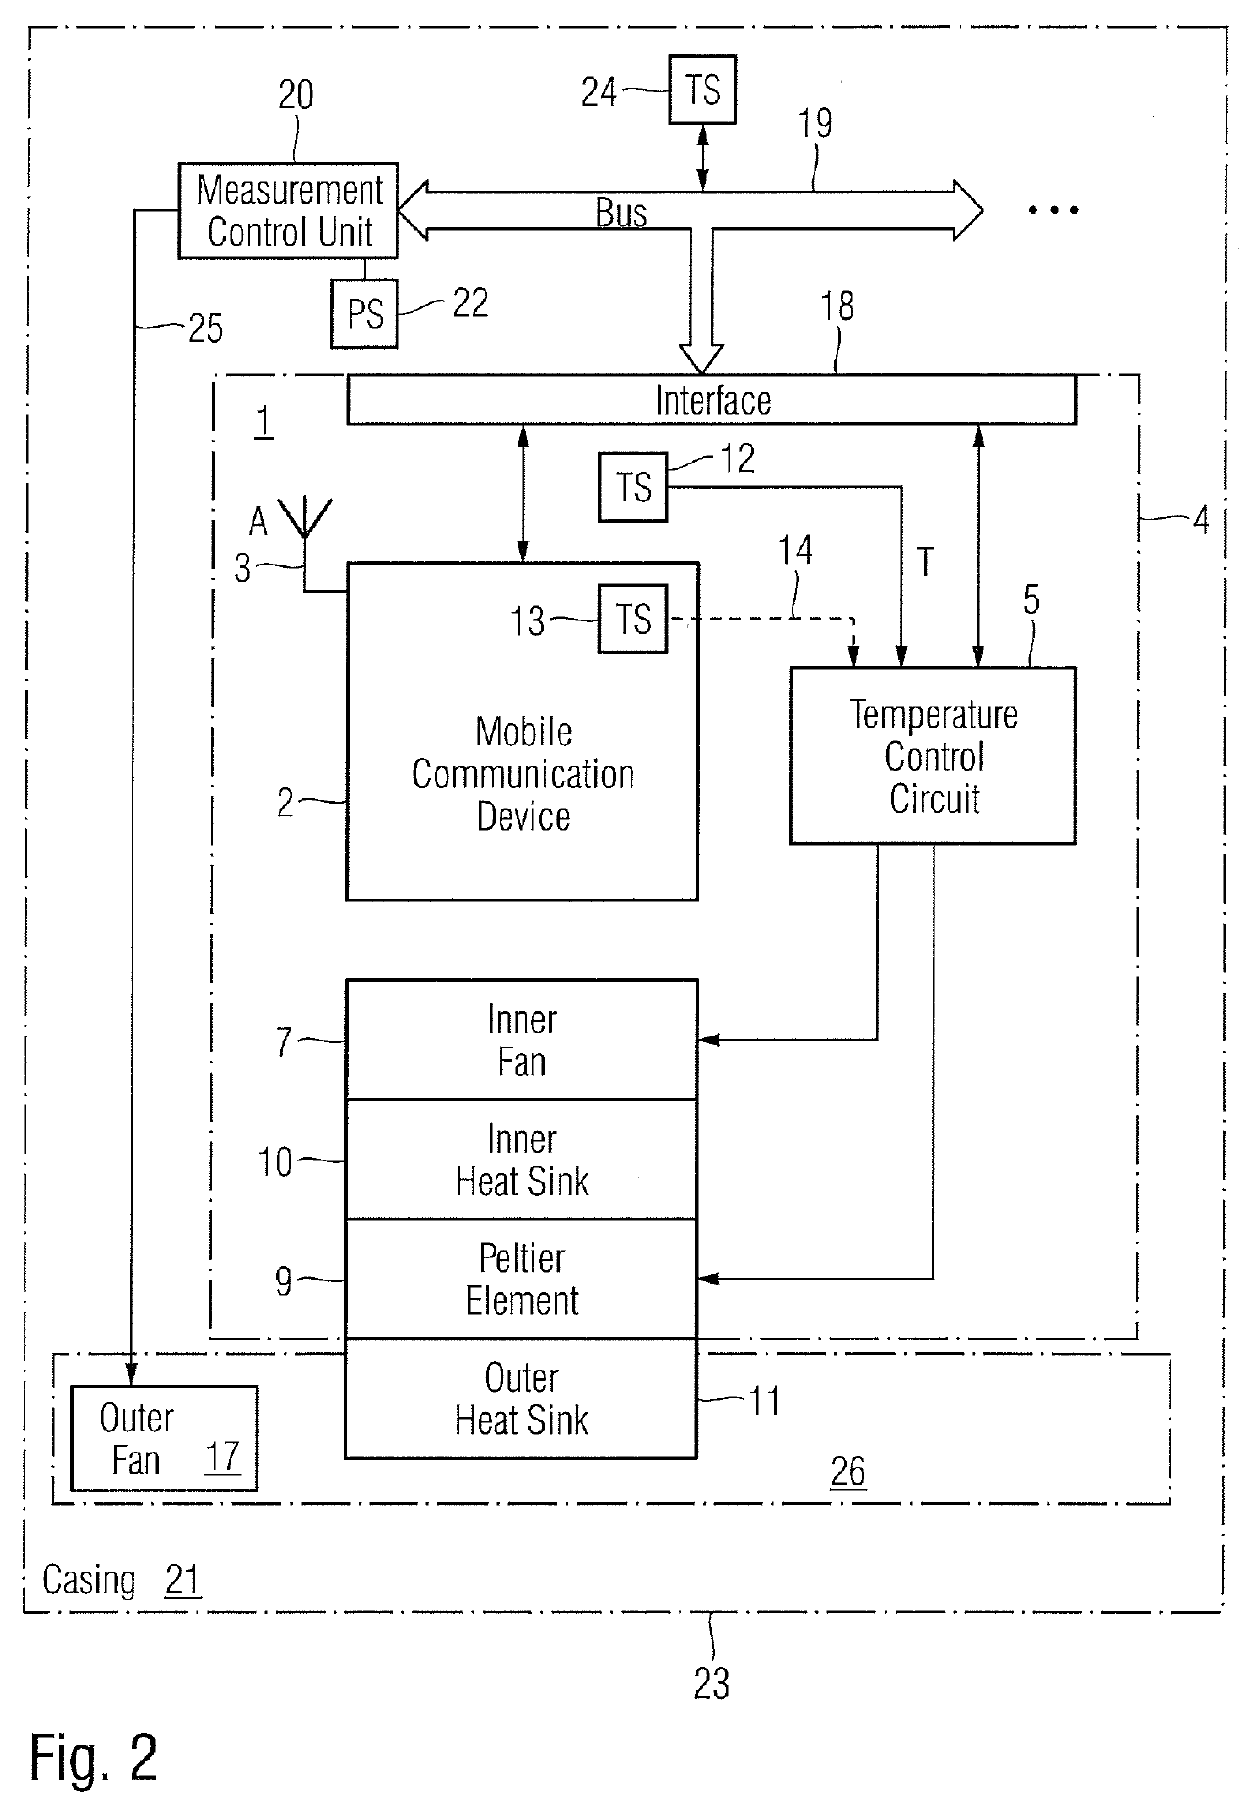 Measurement housing for a communication device